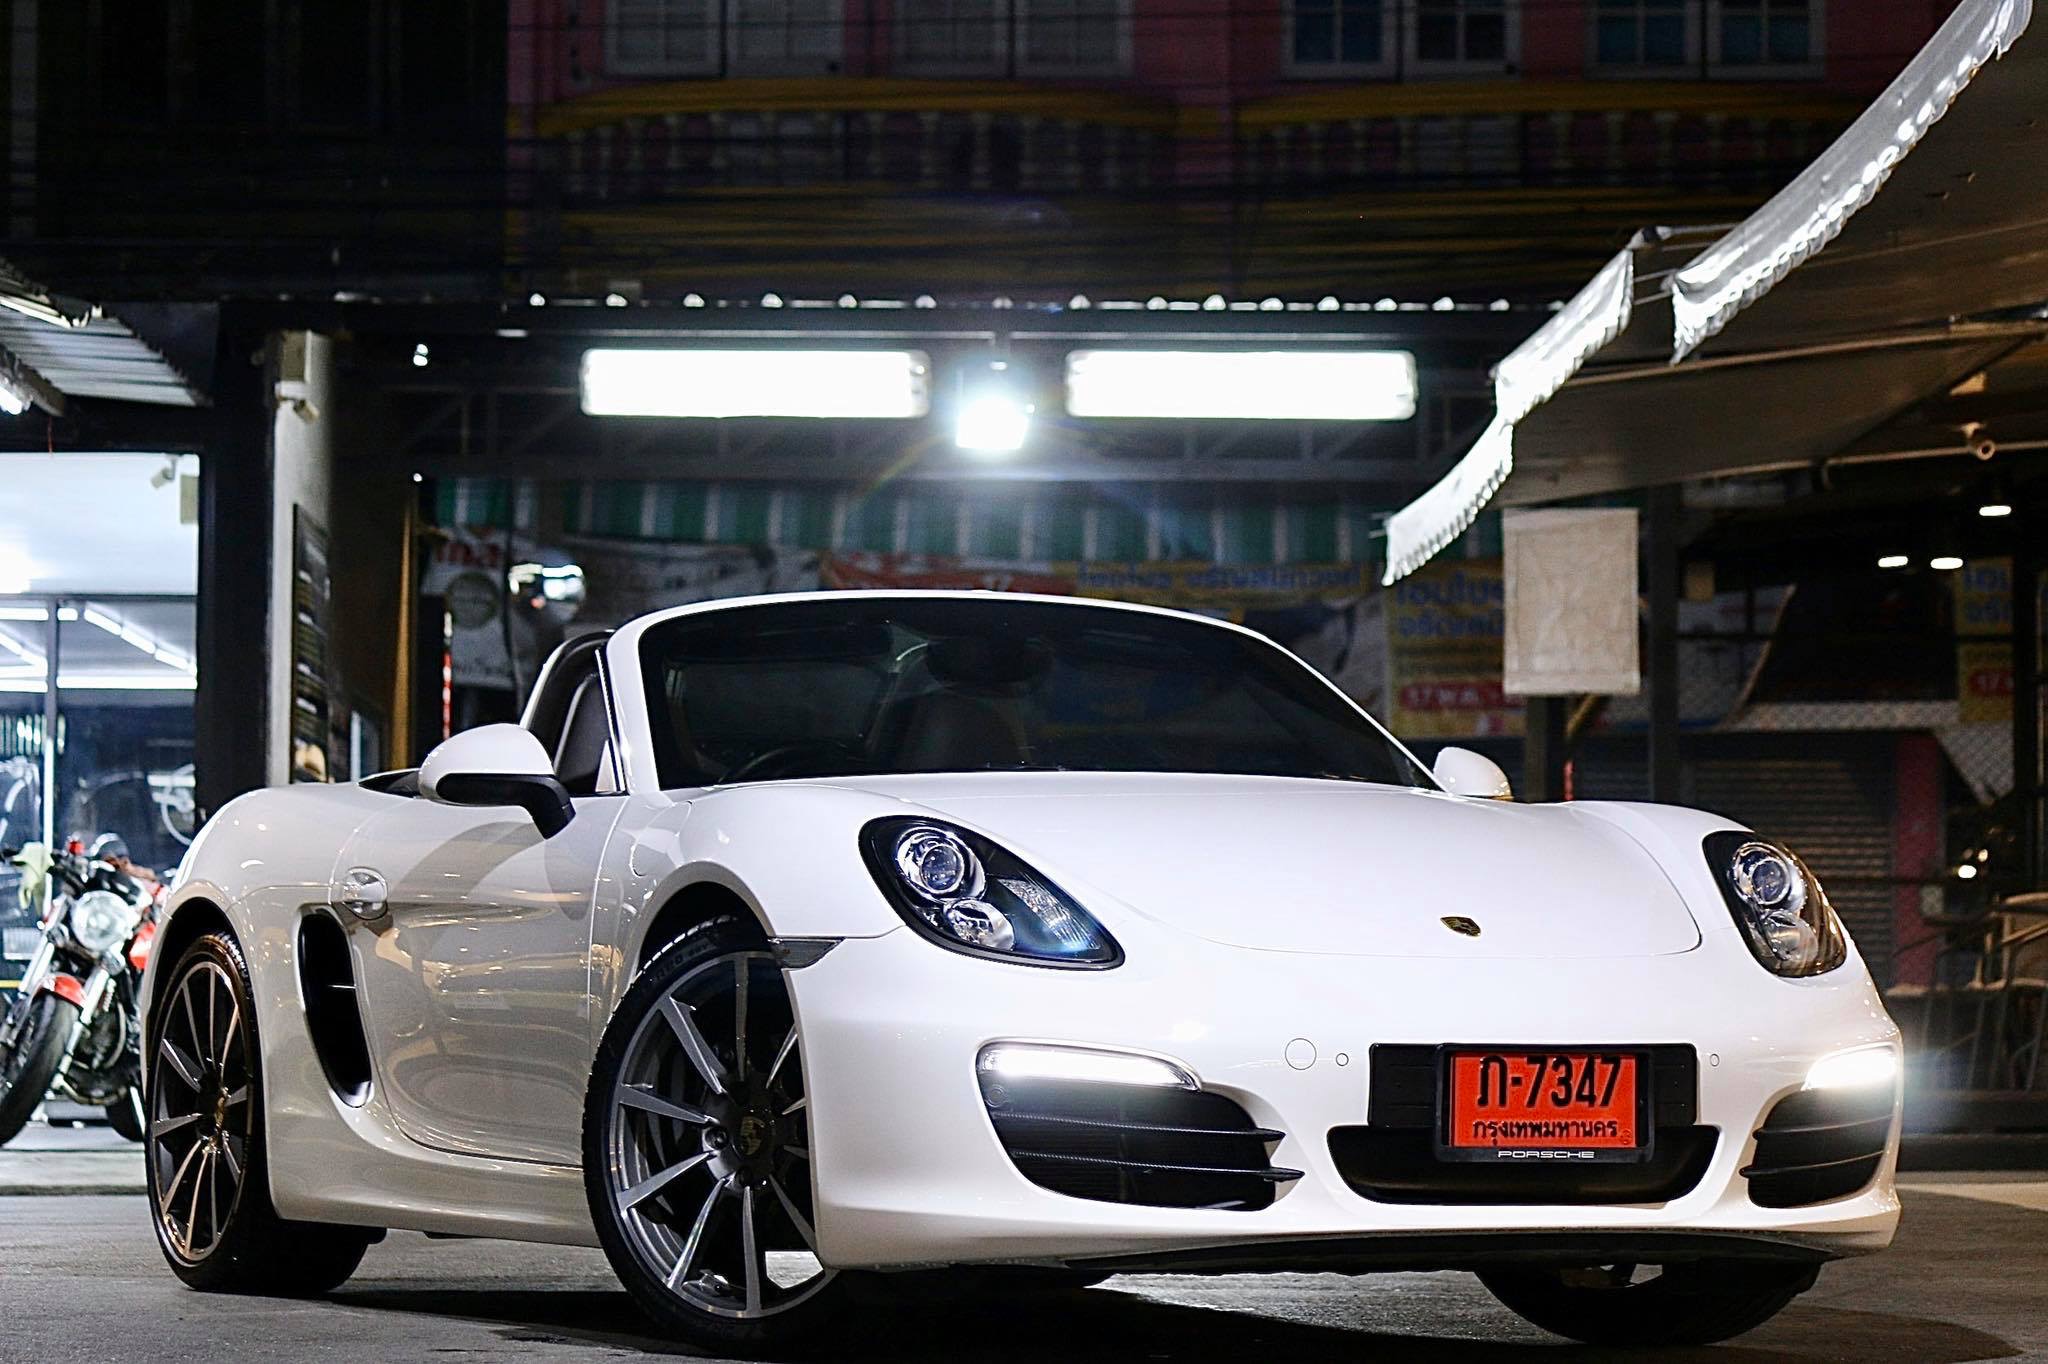 Porsche Boxster (Cayman) 981 ปี 2012 สีขาว